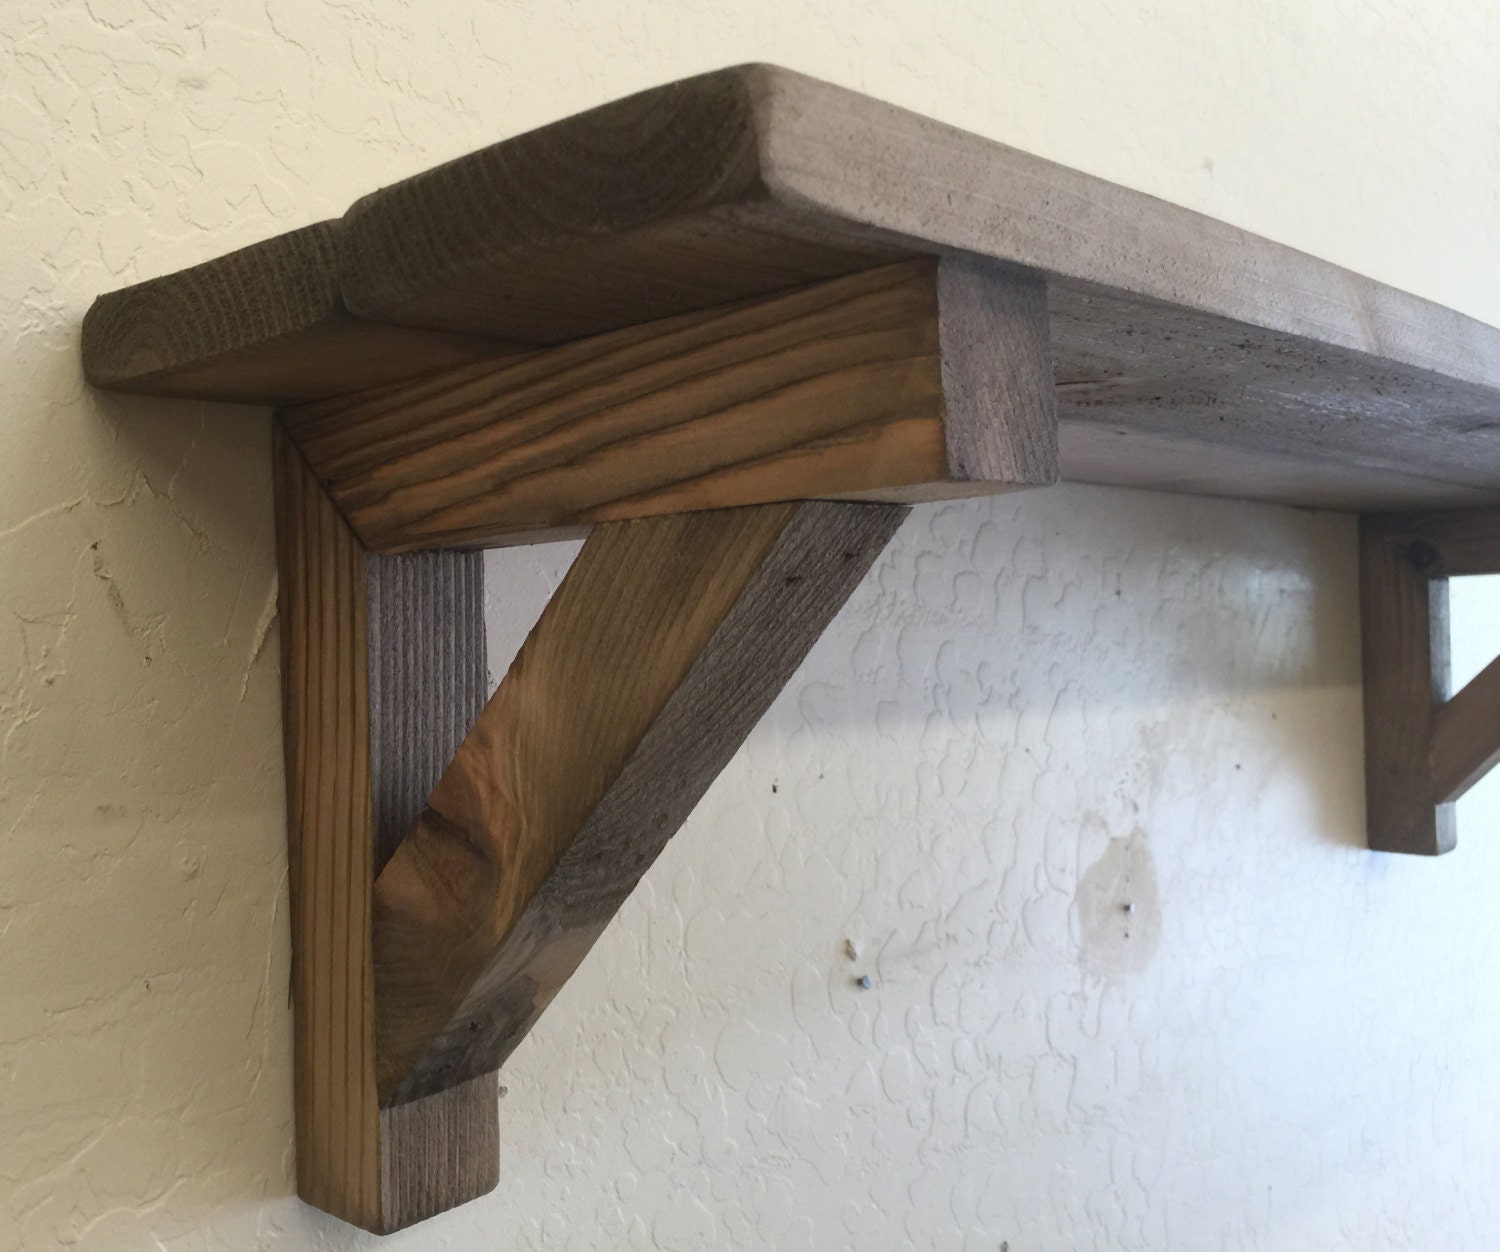 Primitive wall shelf decorative wooden shelf with matching